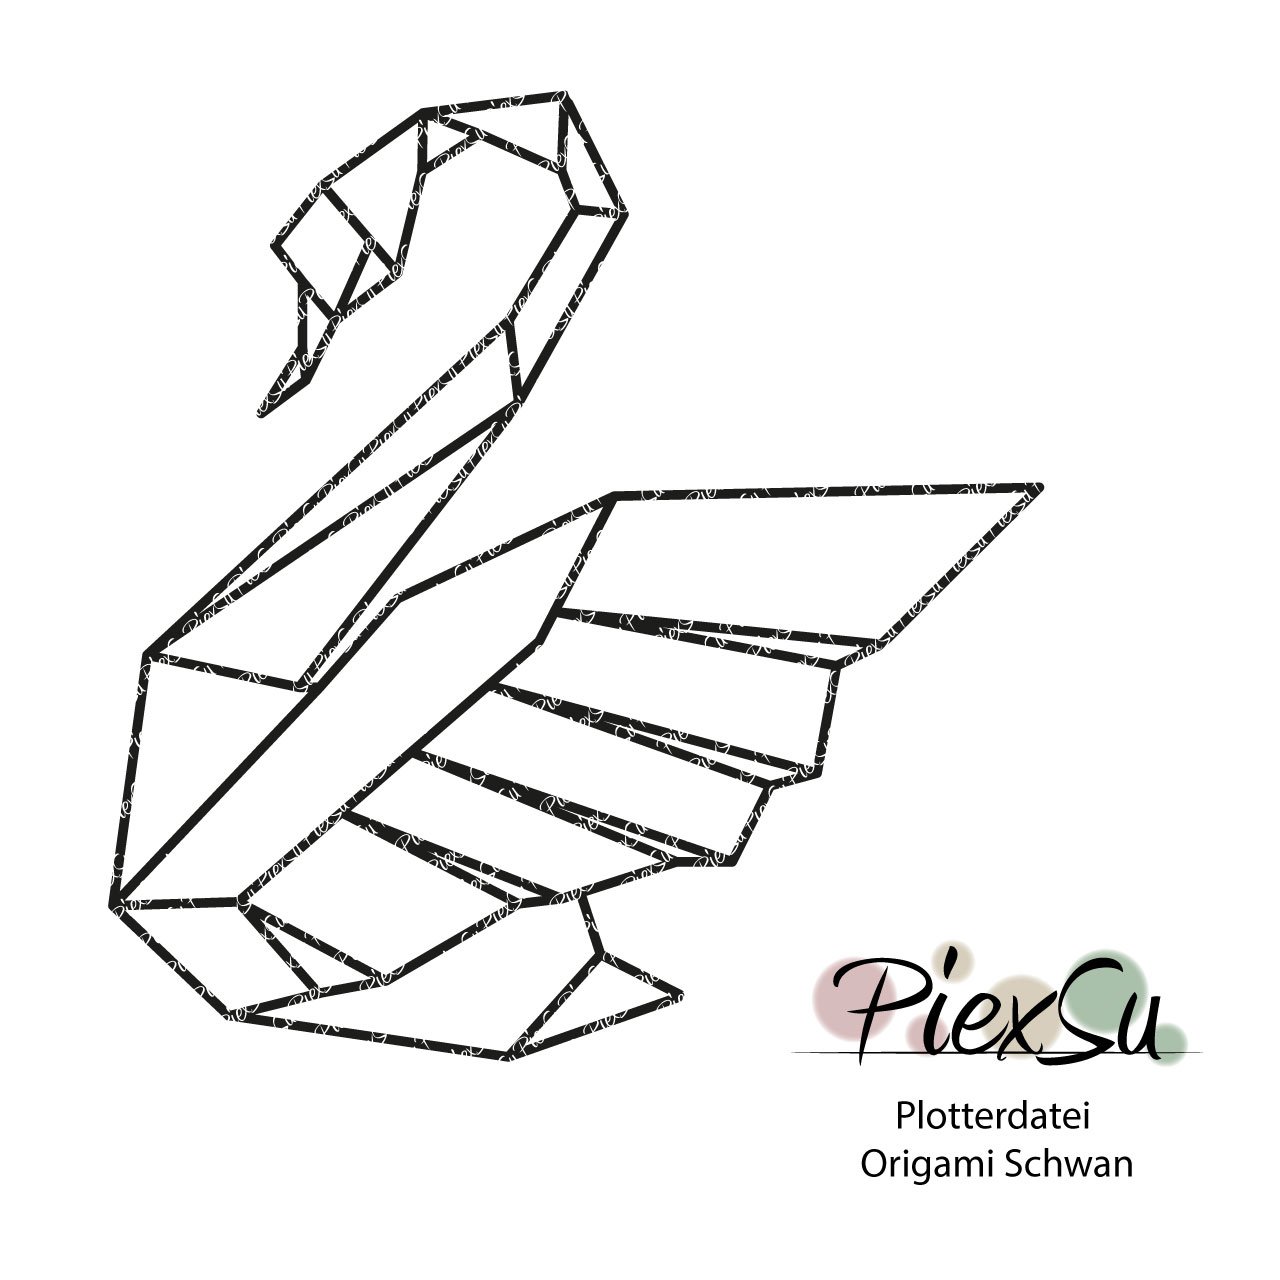 PiexSu-Plotterdatei-Origami-Schwan-plotten-dxf-svg-Titelbild